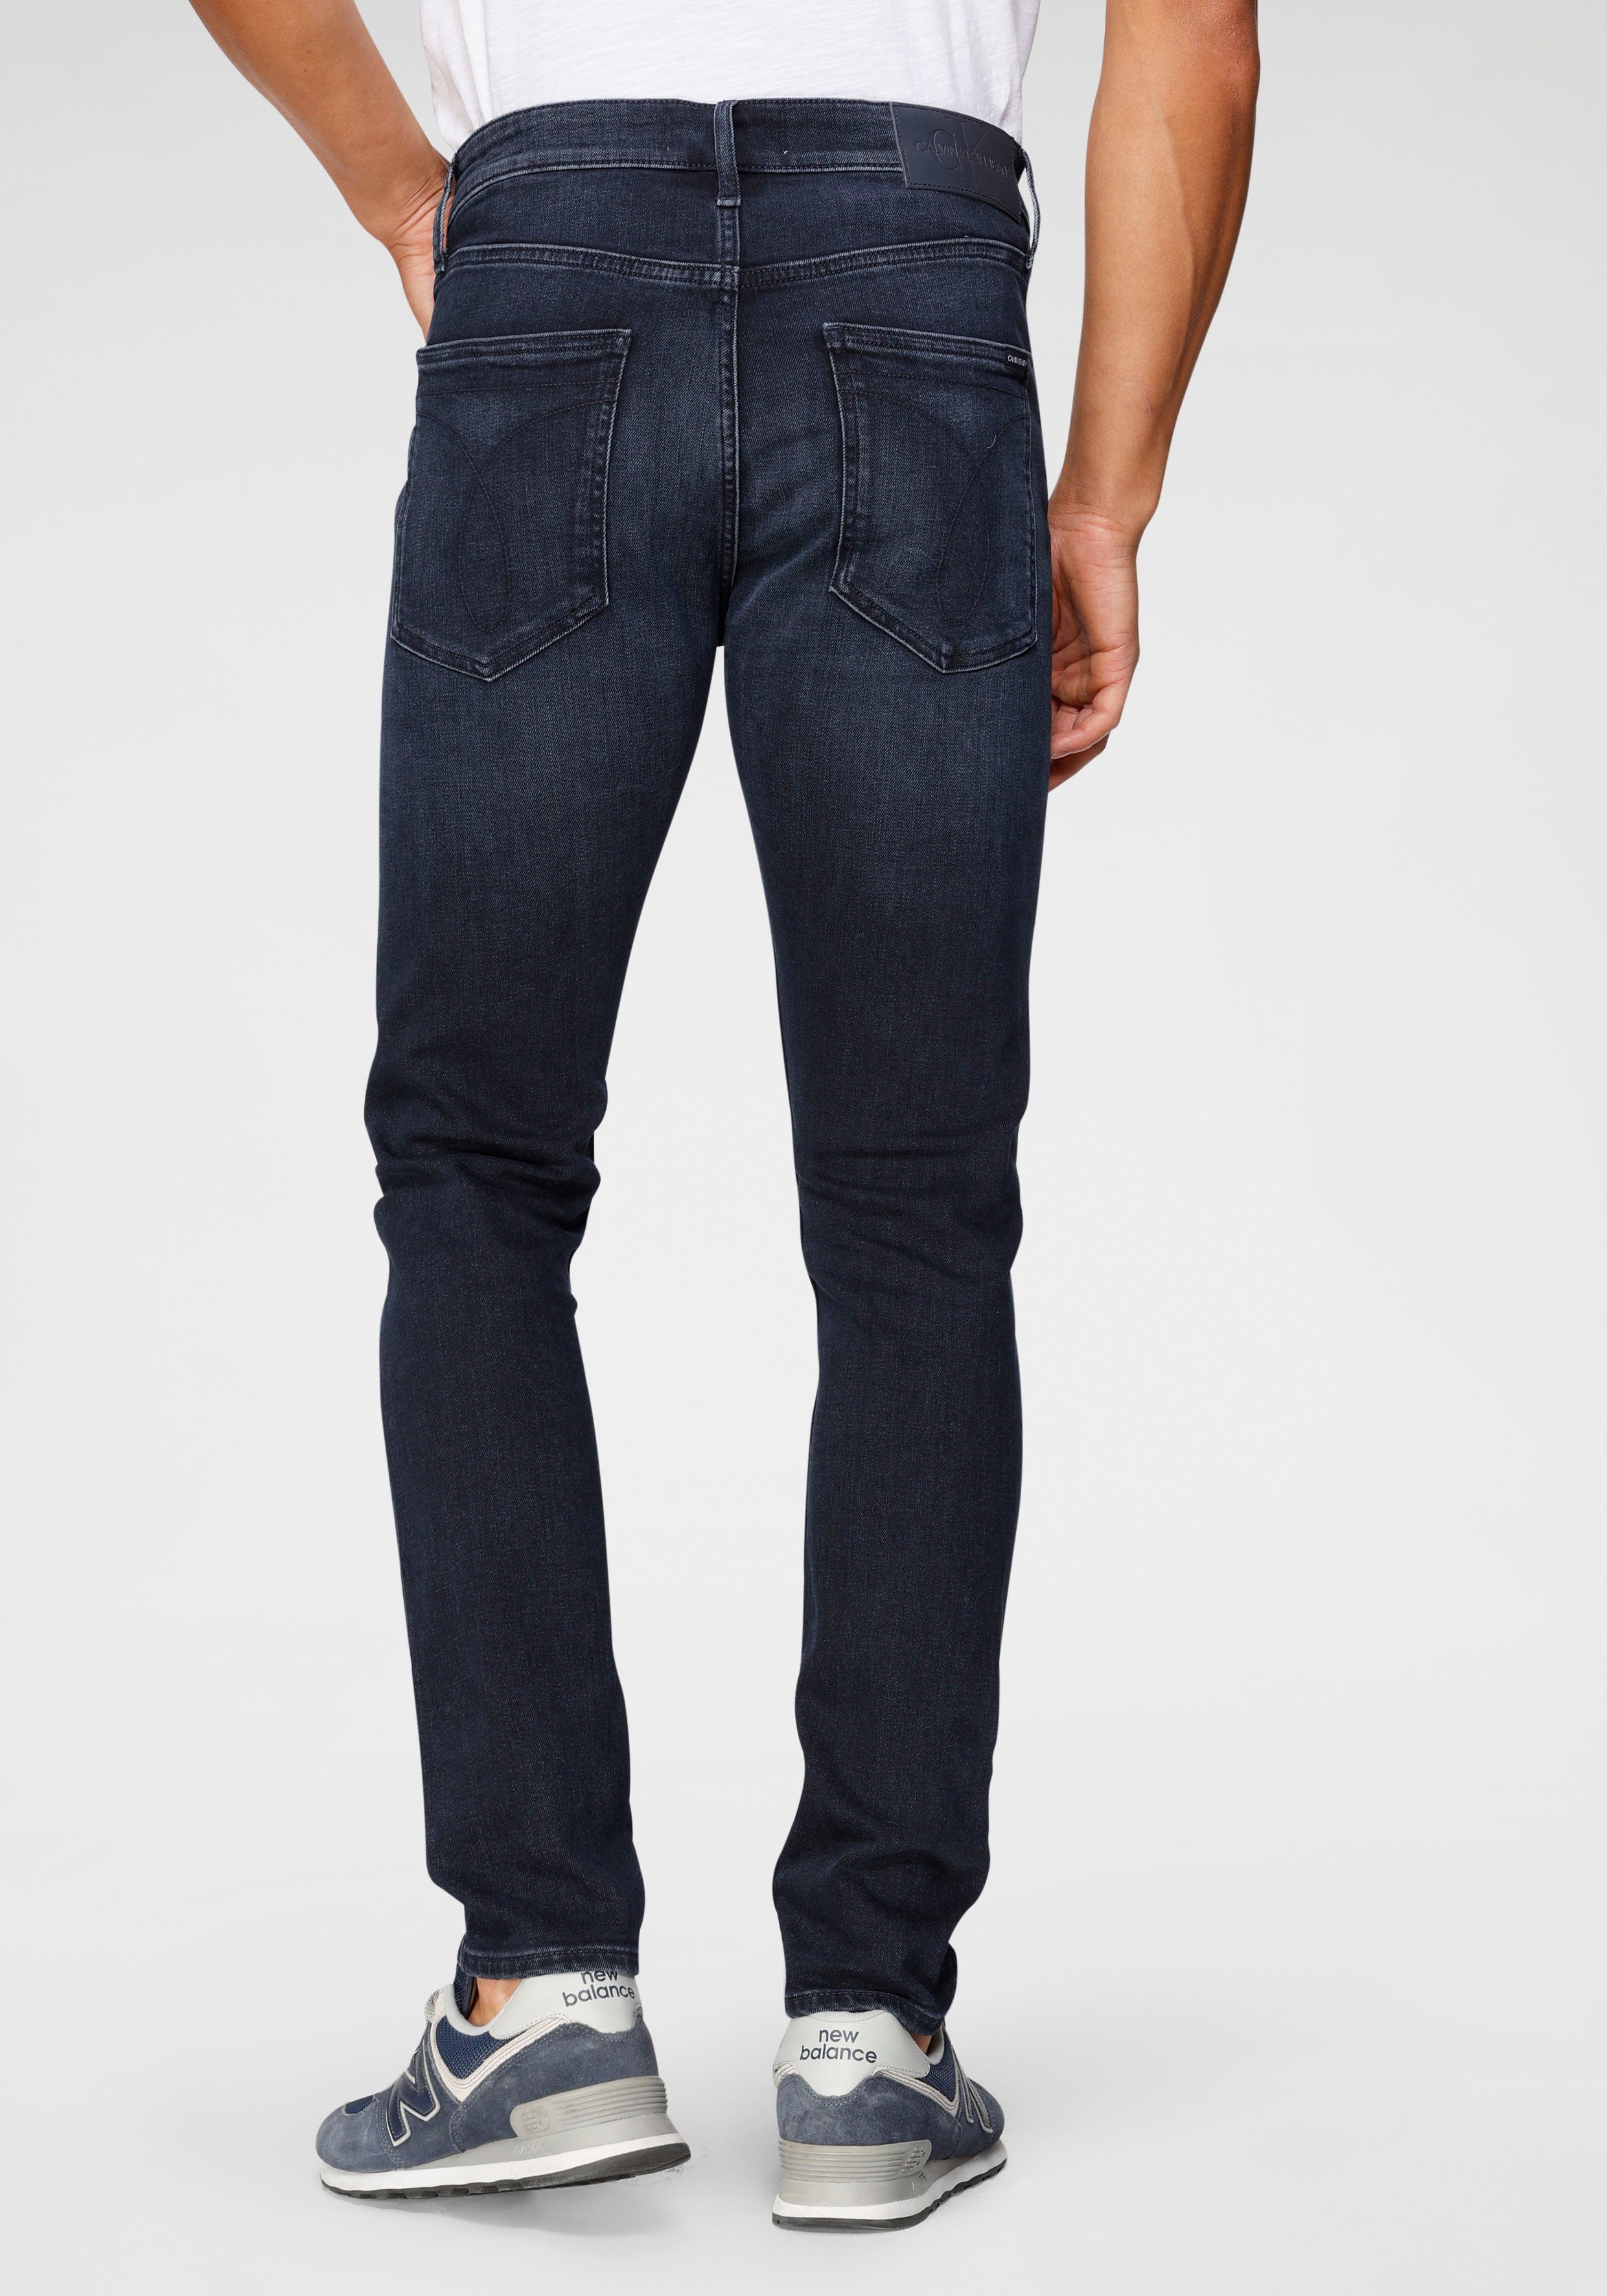 SKINNY Klein 016 Jeans Waschung blue-black CKJ Skinny-fit-Jeans Calvin modische